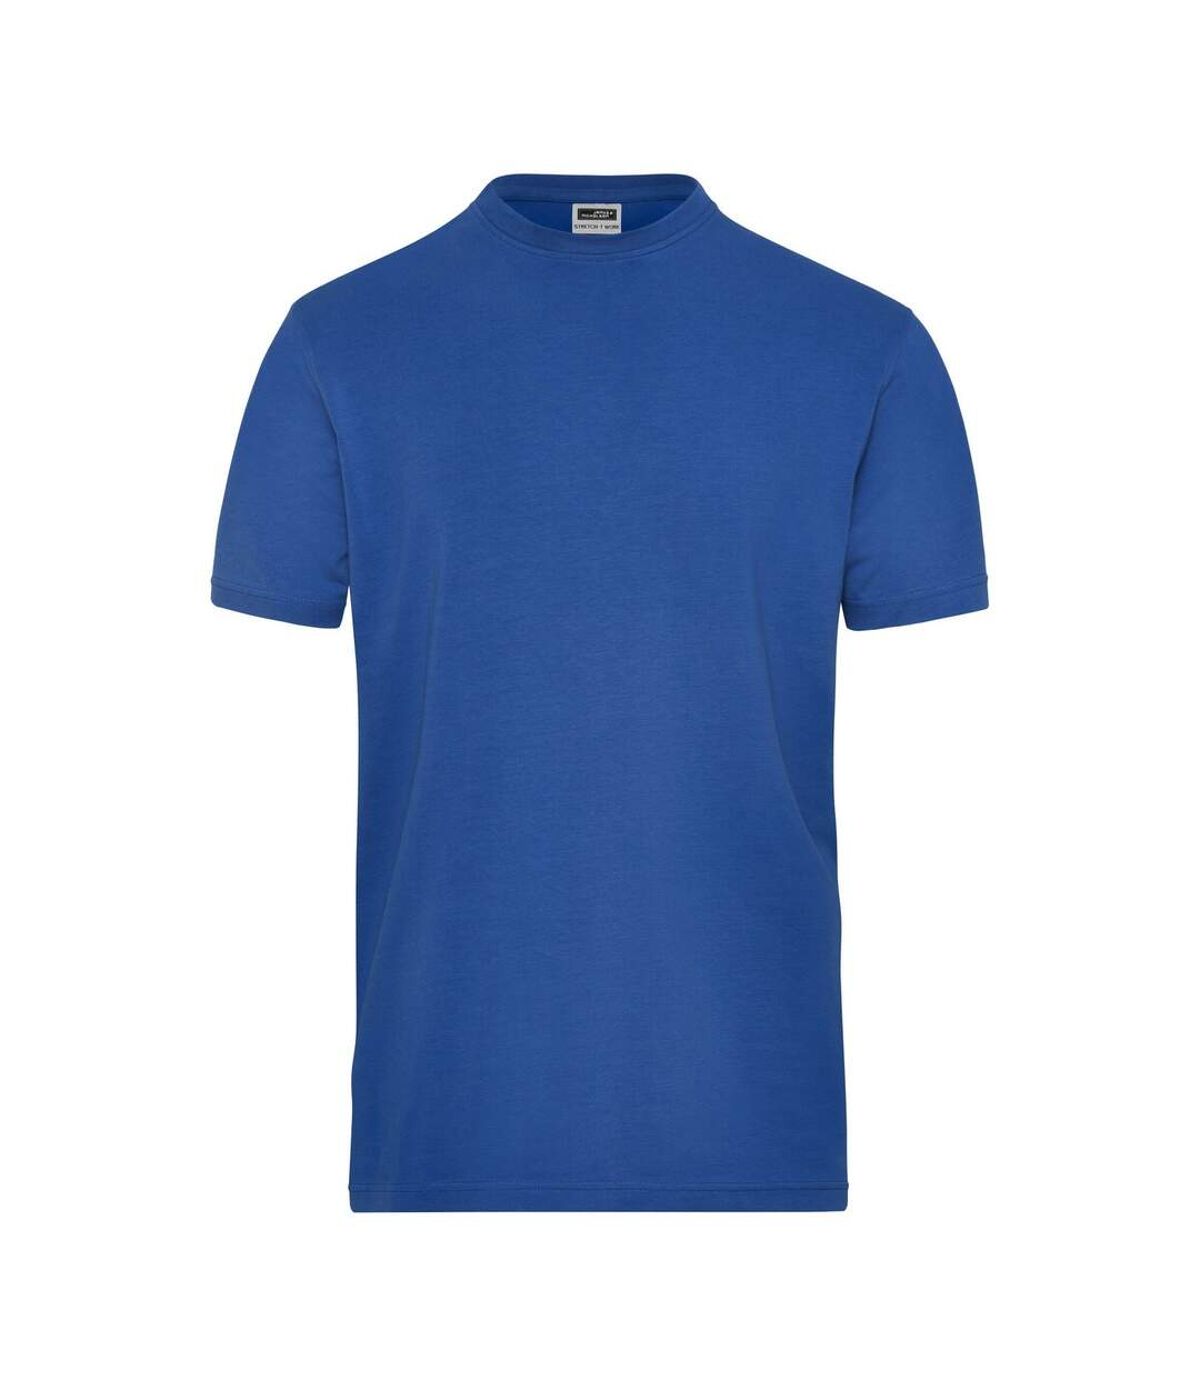 James and Nicholson Mens Organic Cotton Stretch T-Shirt (Royal)